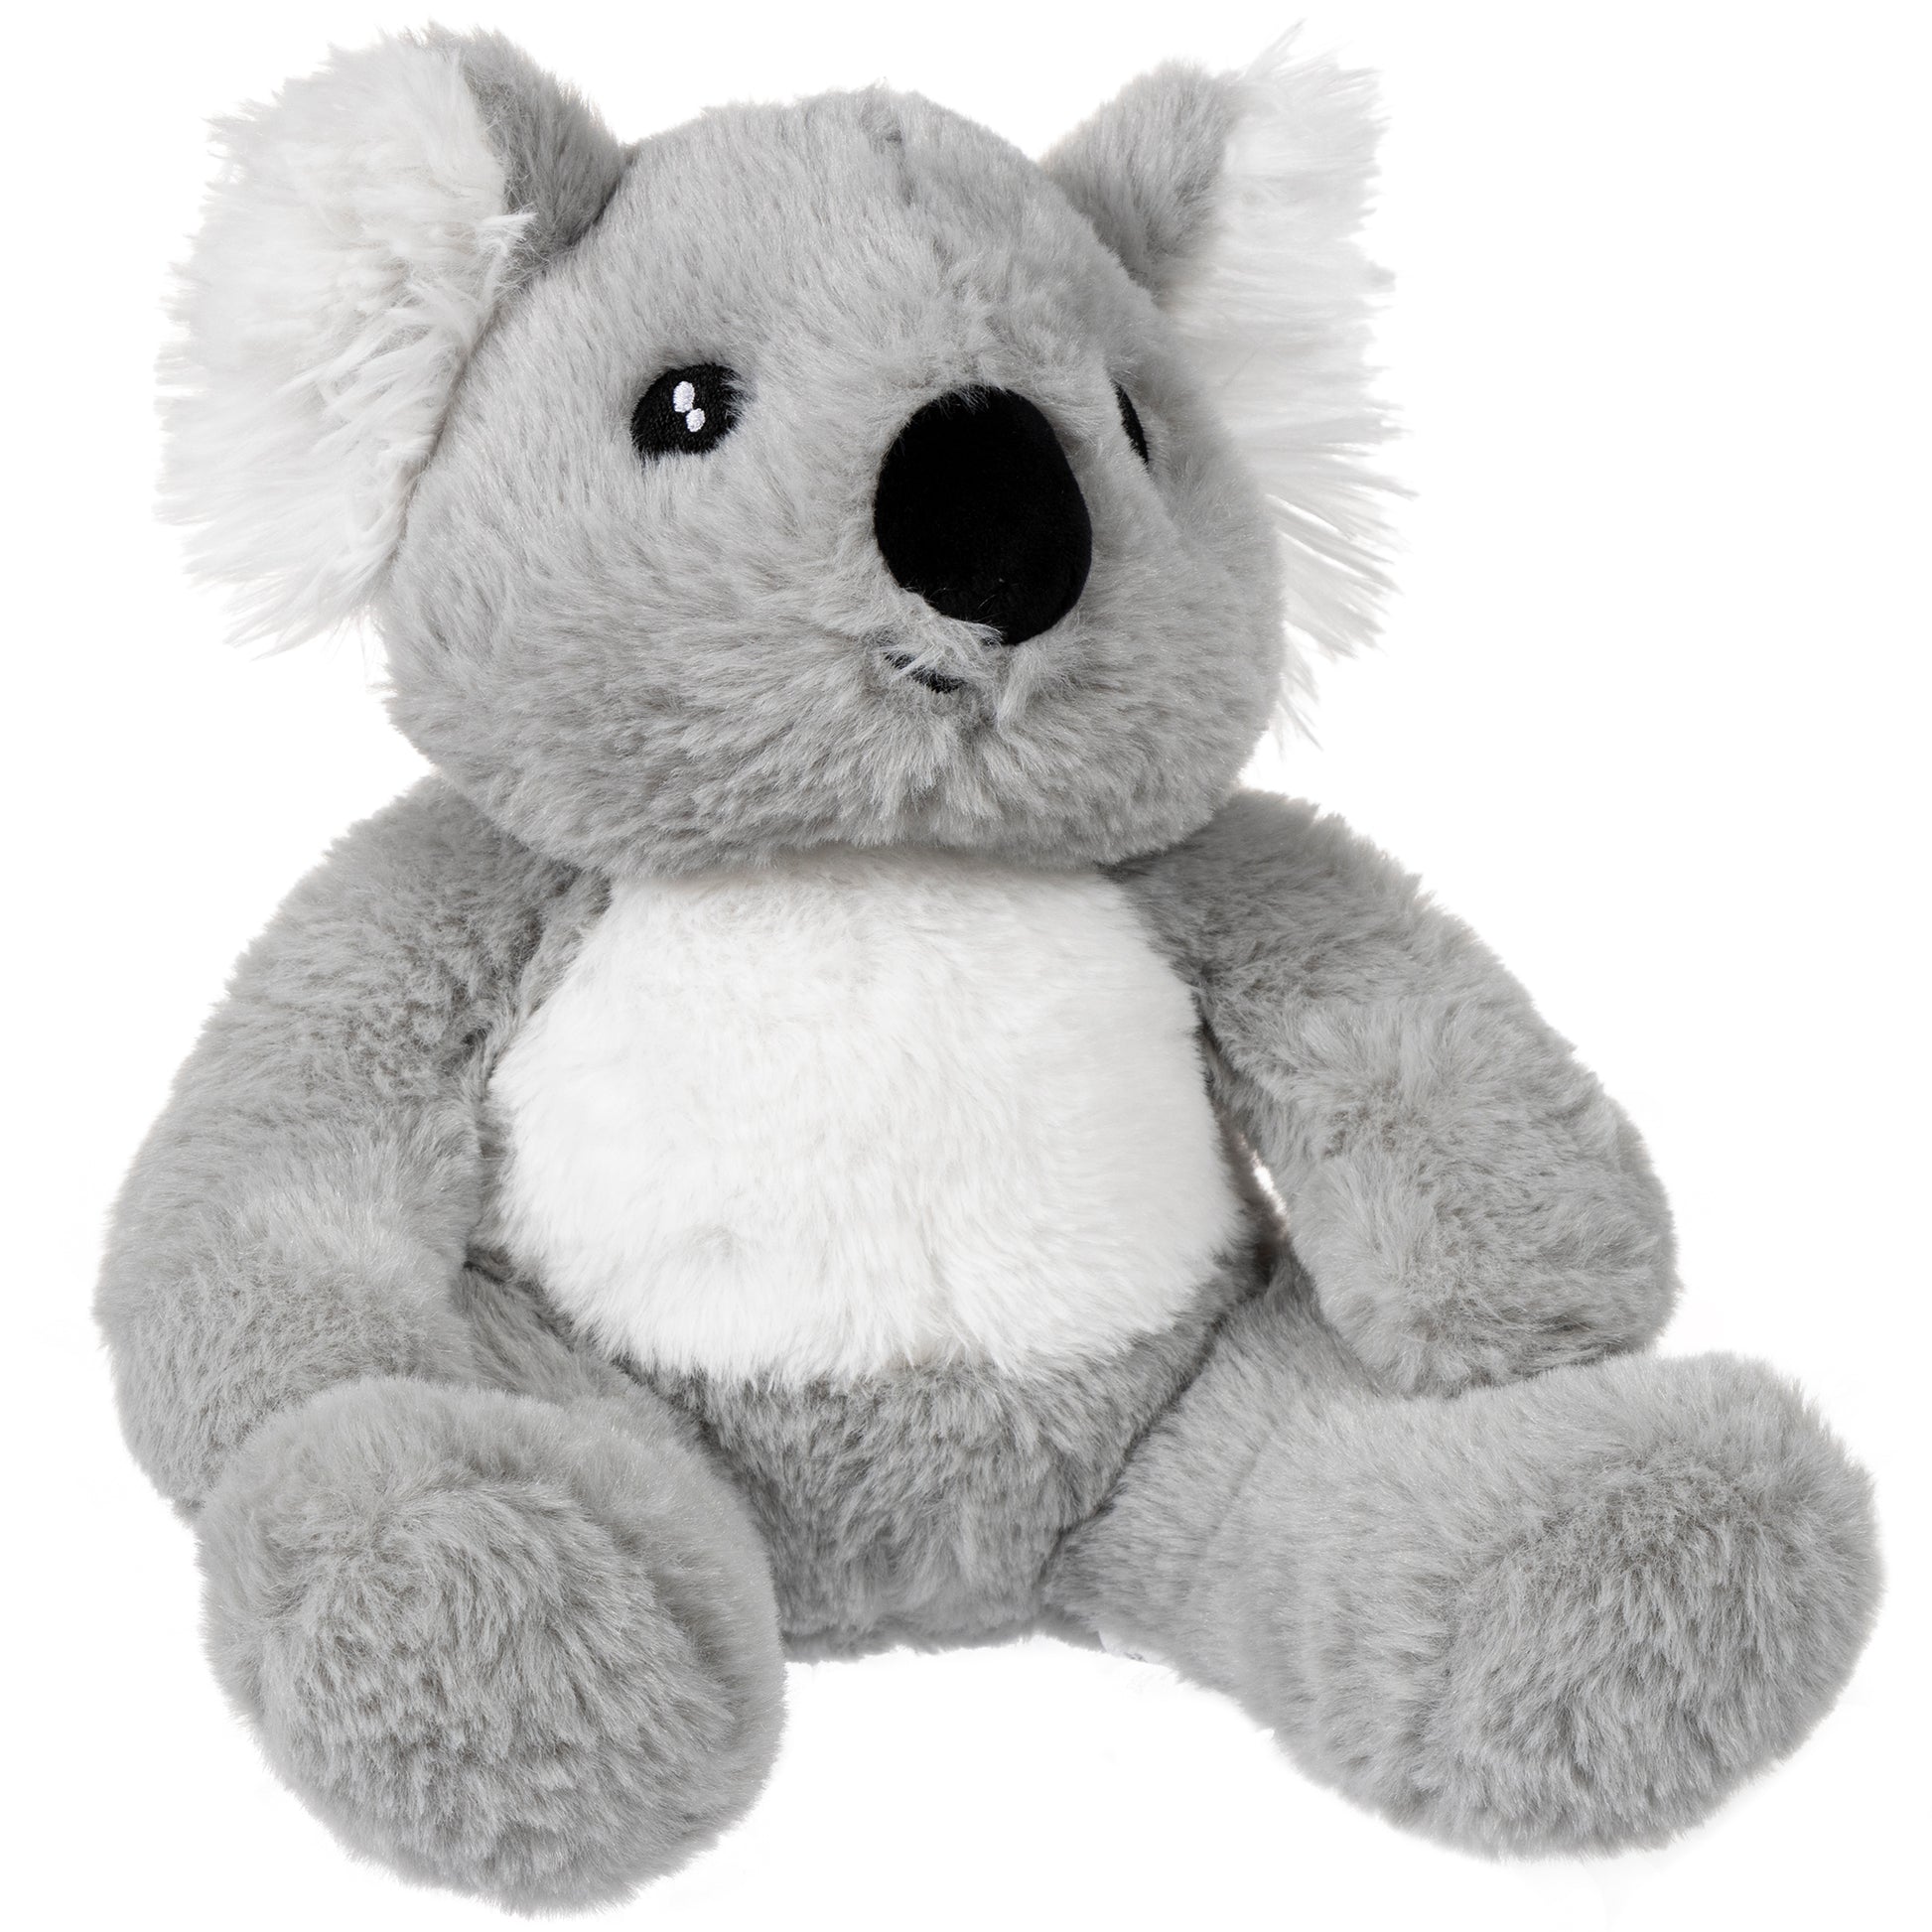 Koala plush toy 9 inch- angled view